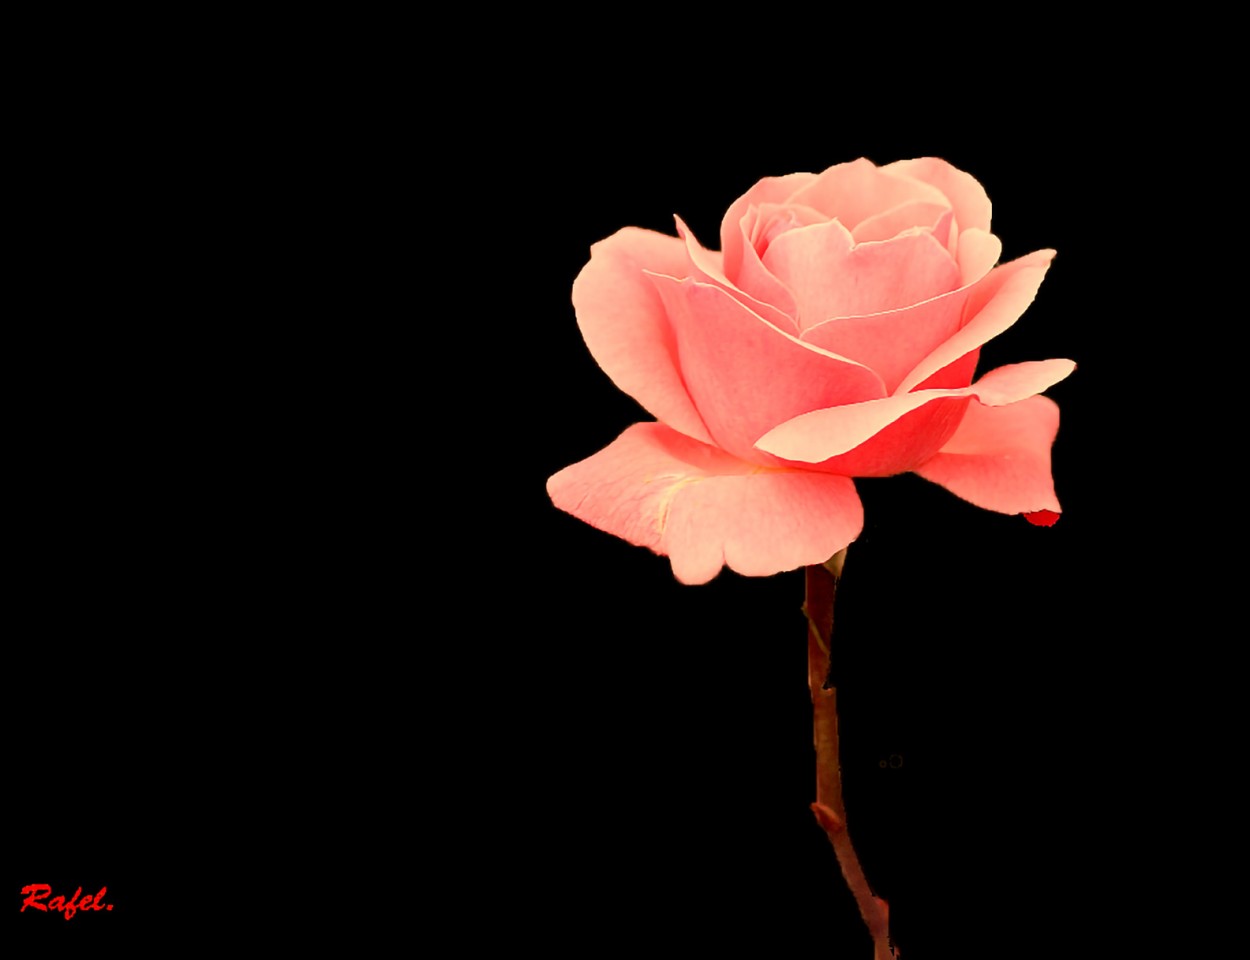 "Una sencilla rosa para ti." de Rafael Serrano Arguedas